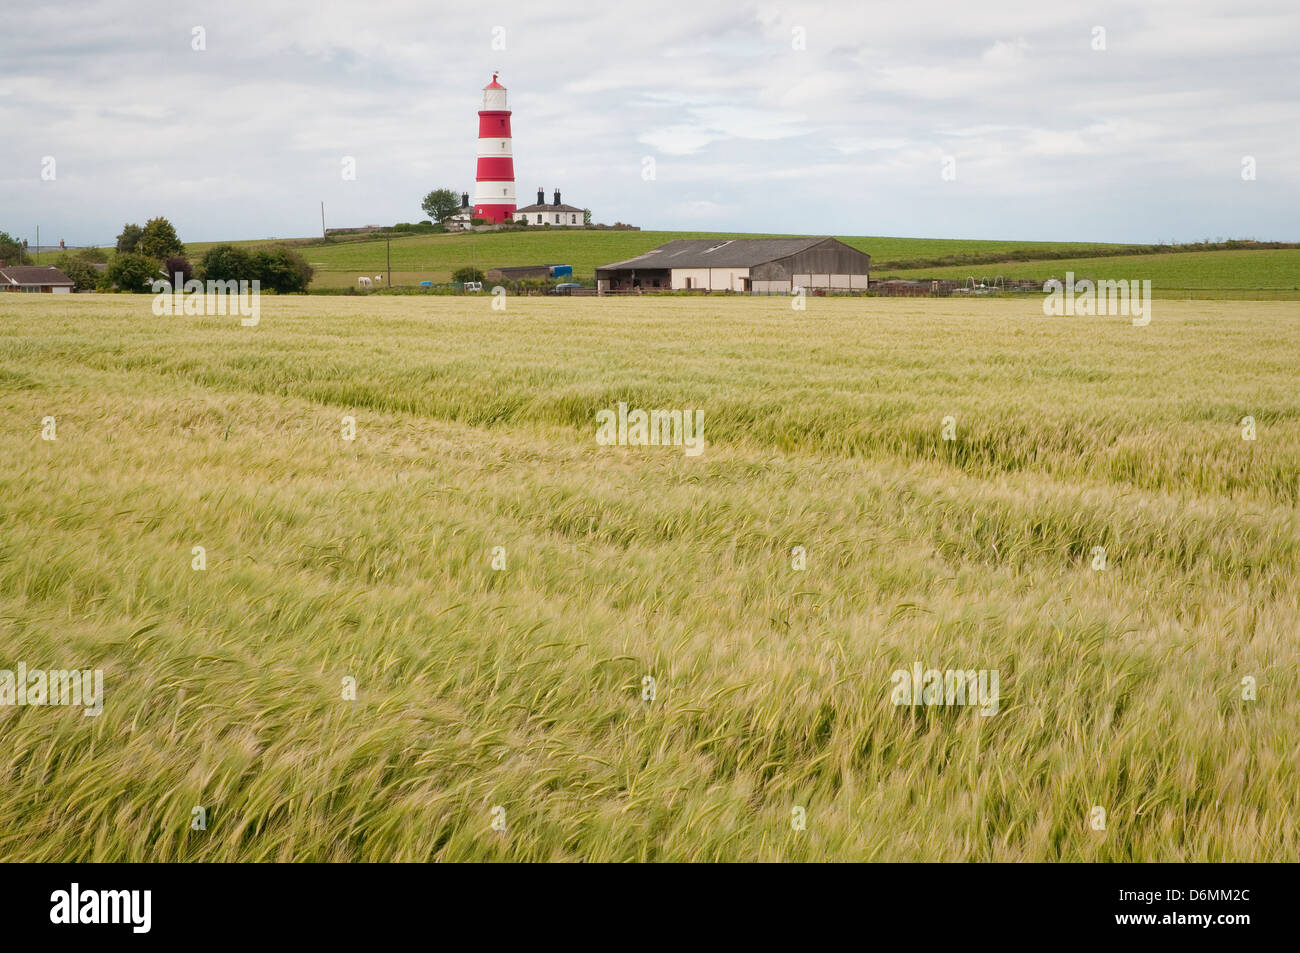 The red-white lighthouse, Happisburgh, Norfolk, UK Stock Photo